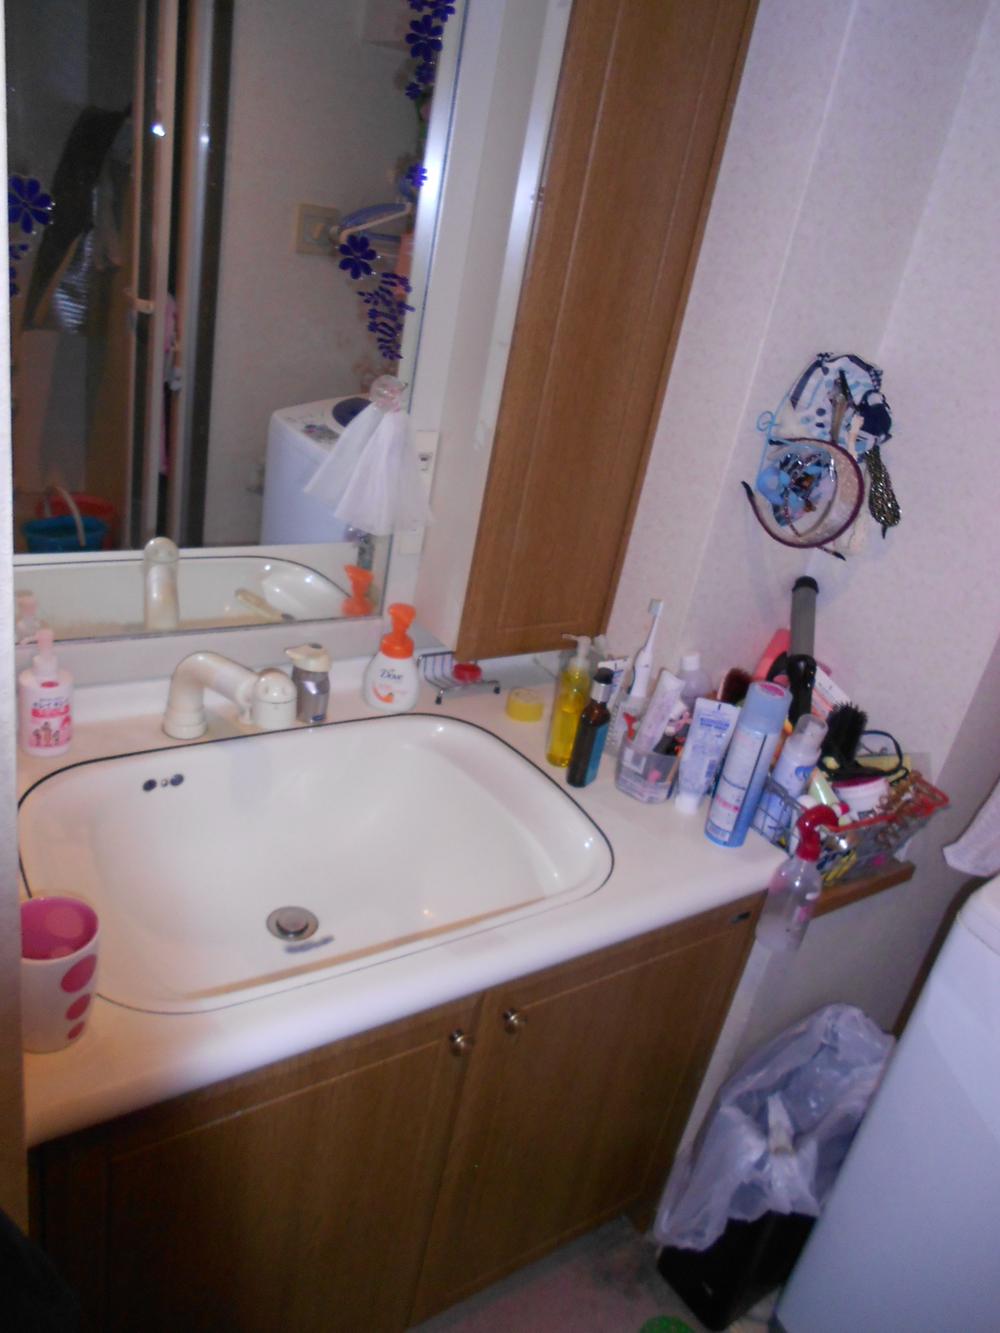 Wash basin, toilet. It is vanity shower faucet.